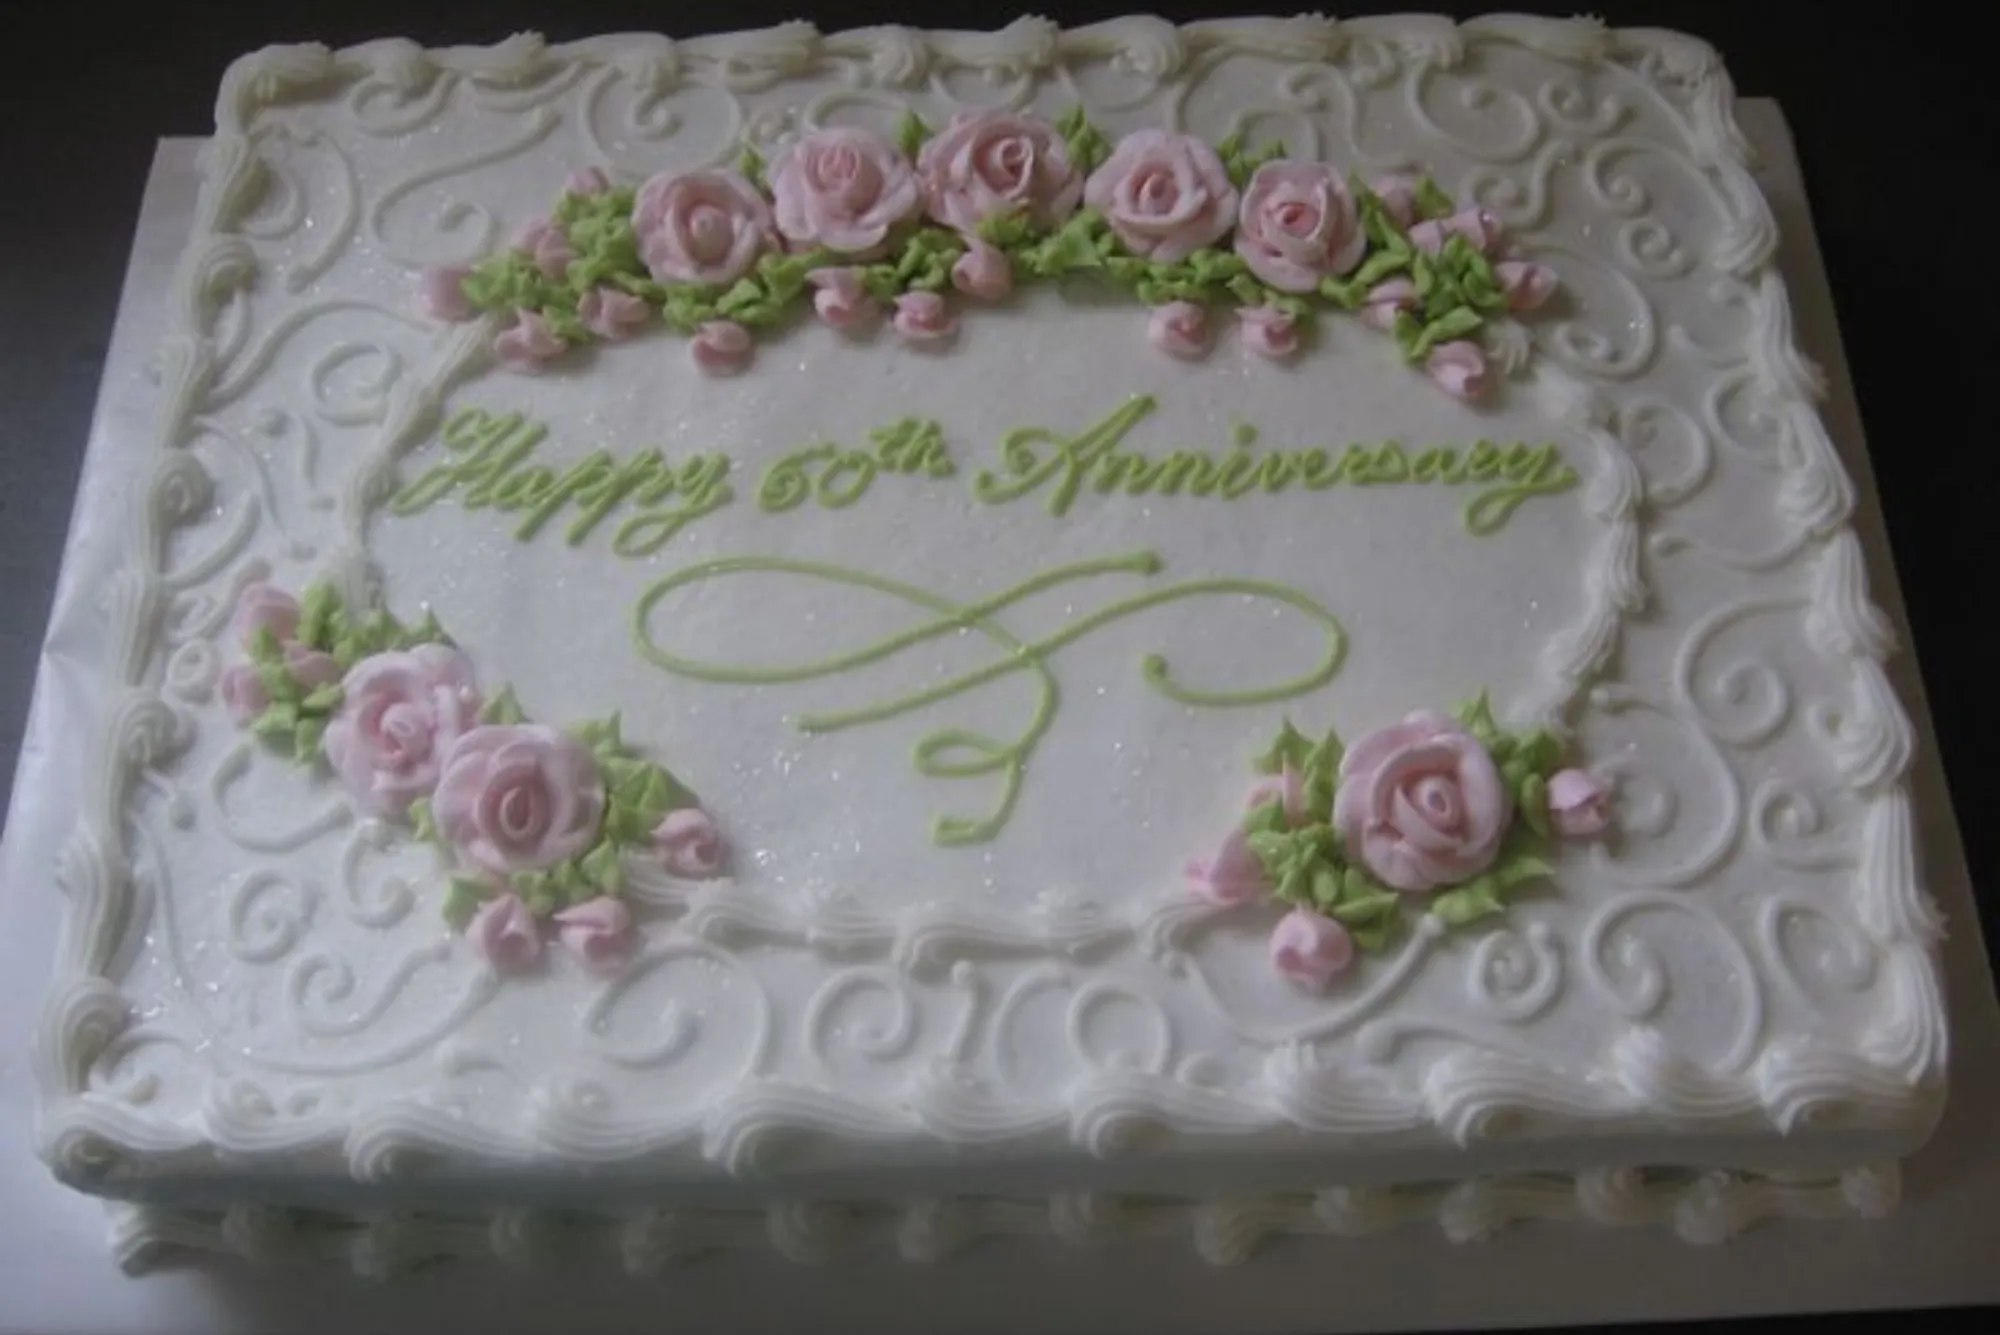 Anniversary Celebration Cake Ideas | Solas Entertainment Services